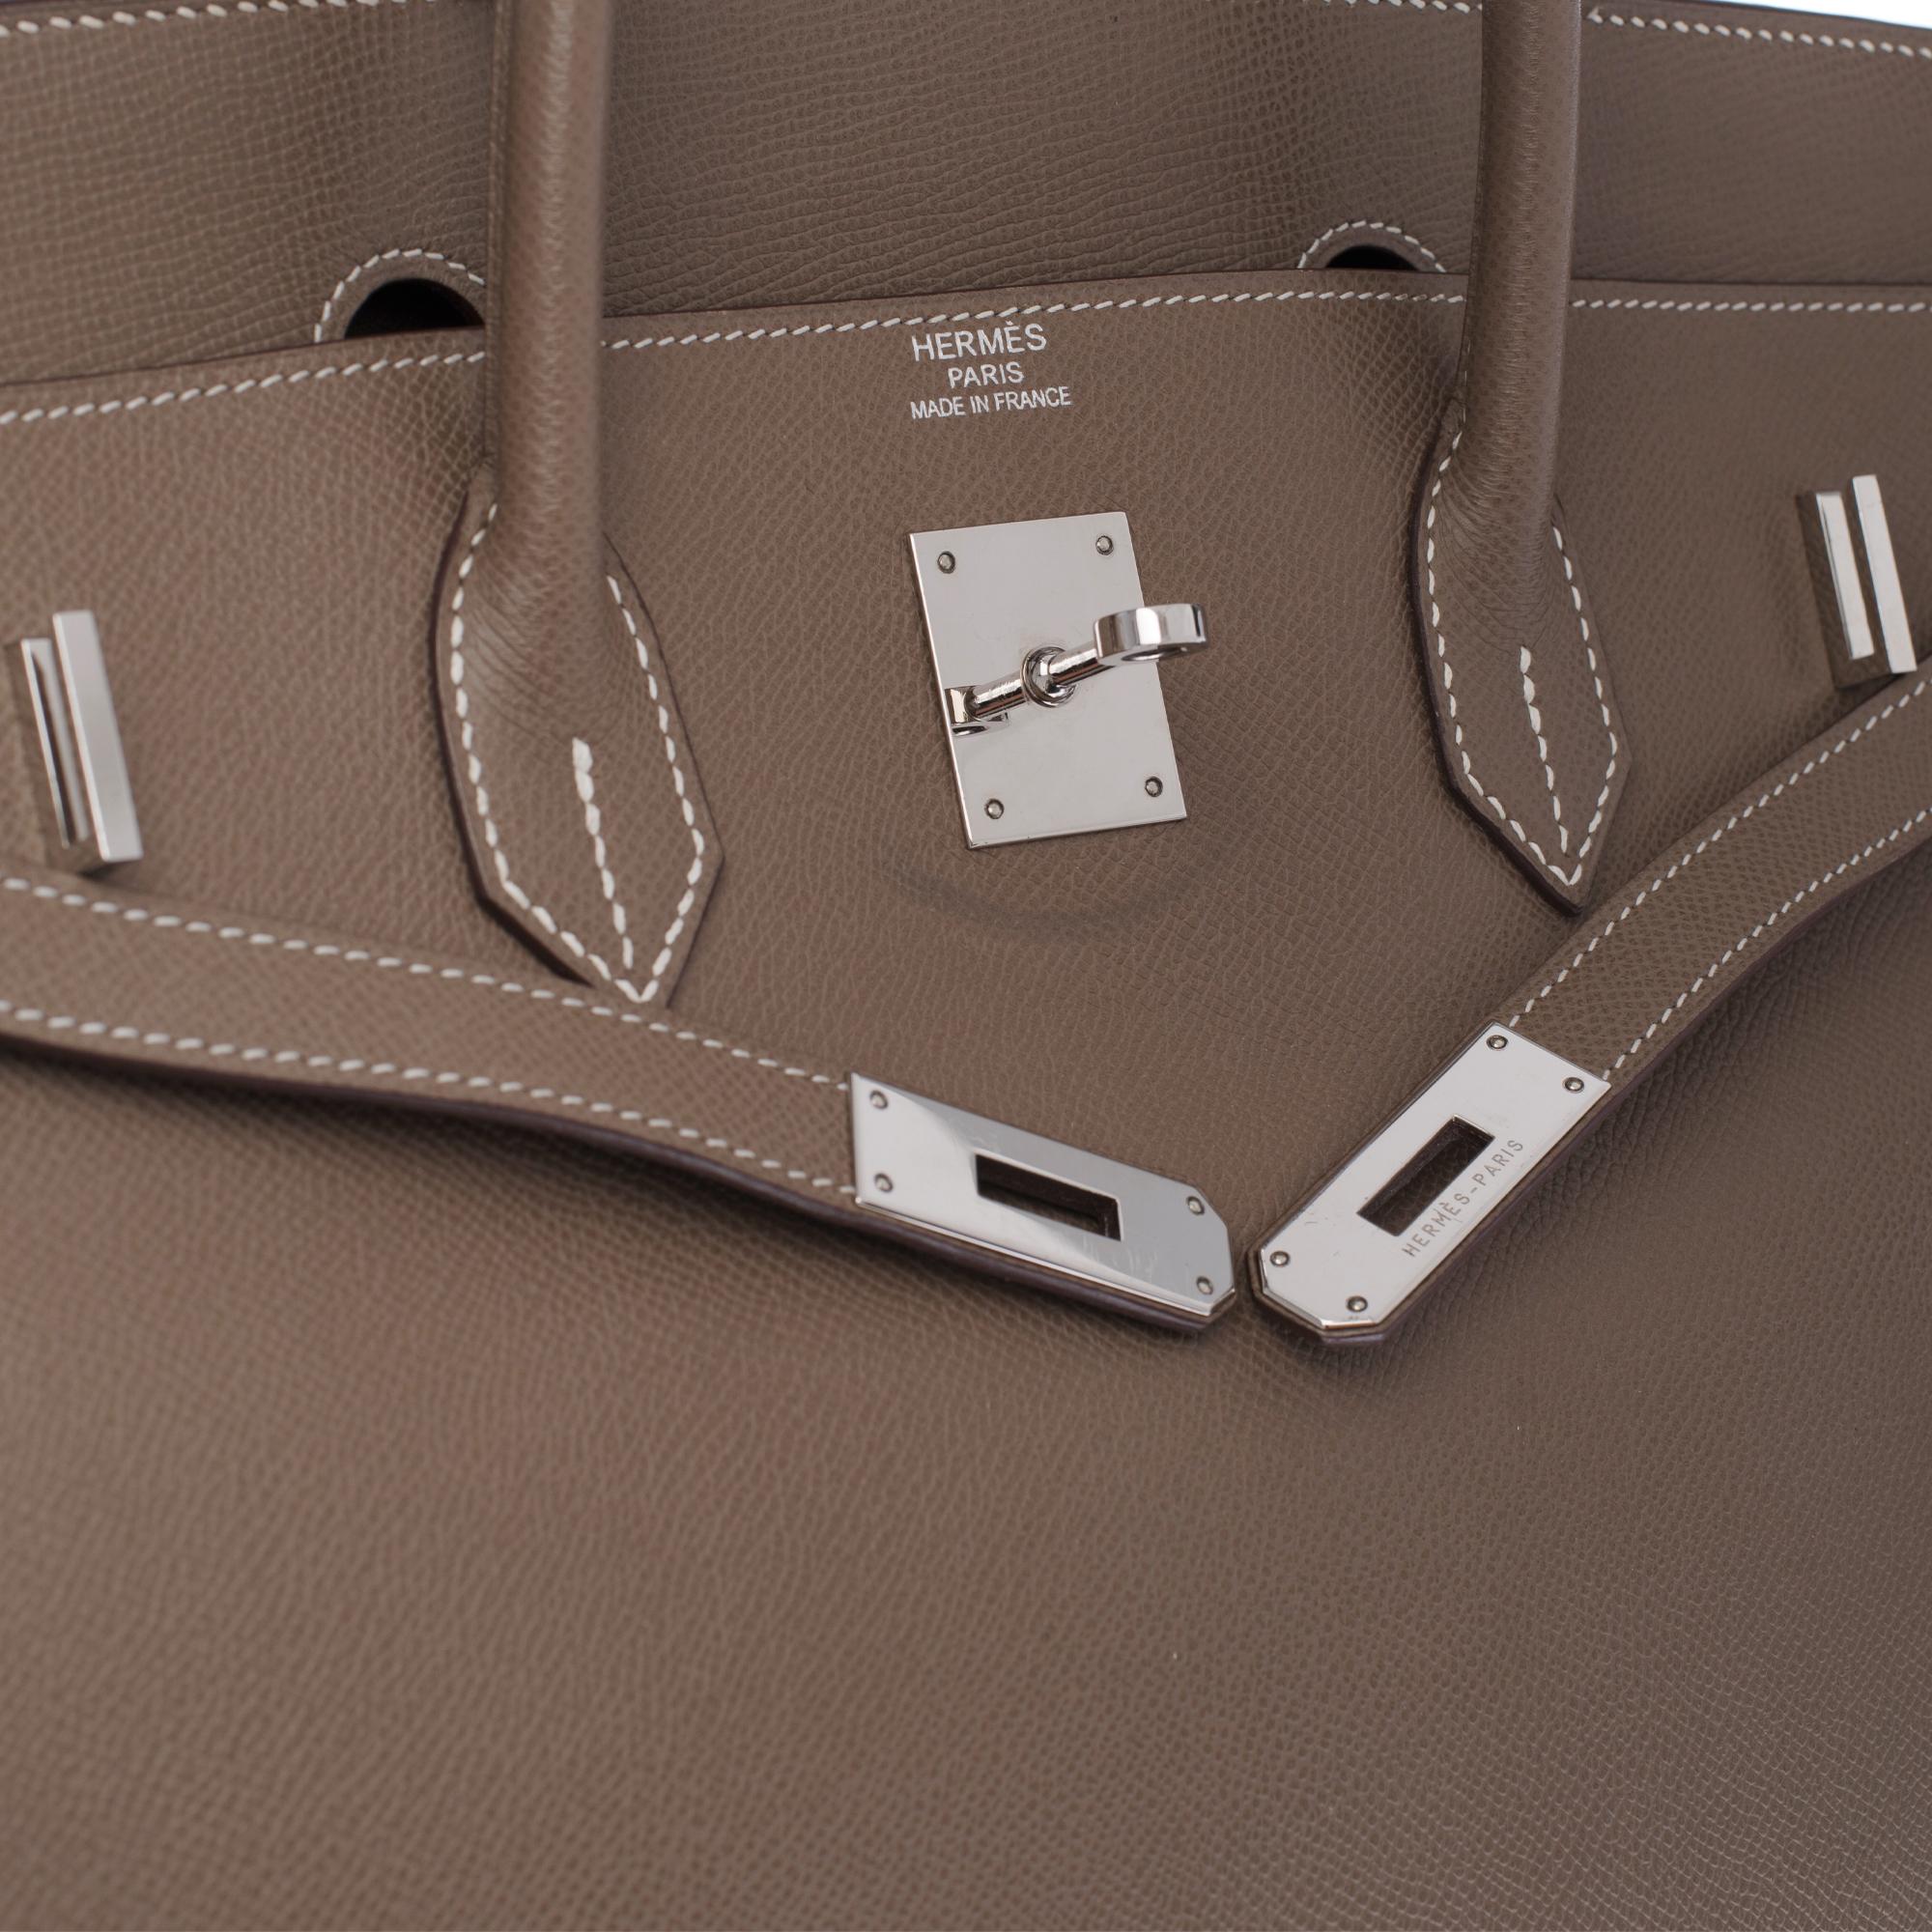 Women's or Men's Stunning Hermes Birkin 40cm handbag in Brown Togo leather with gold hardware